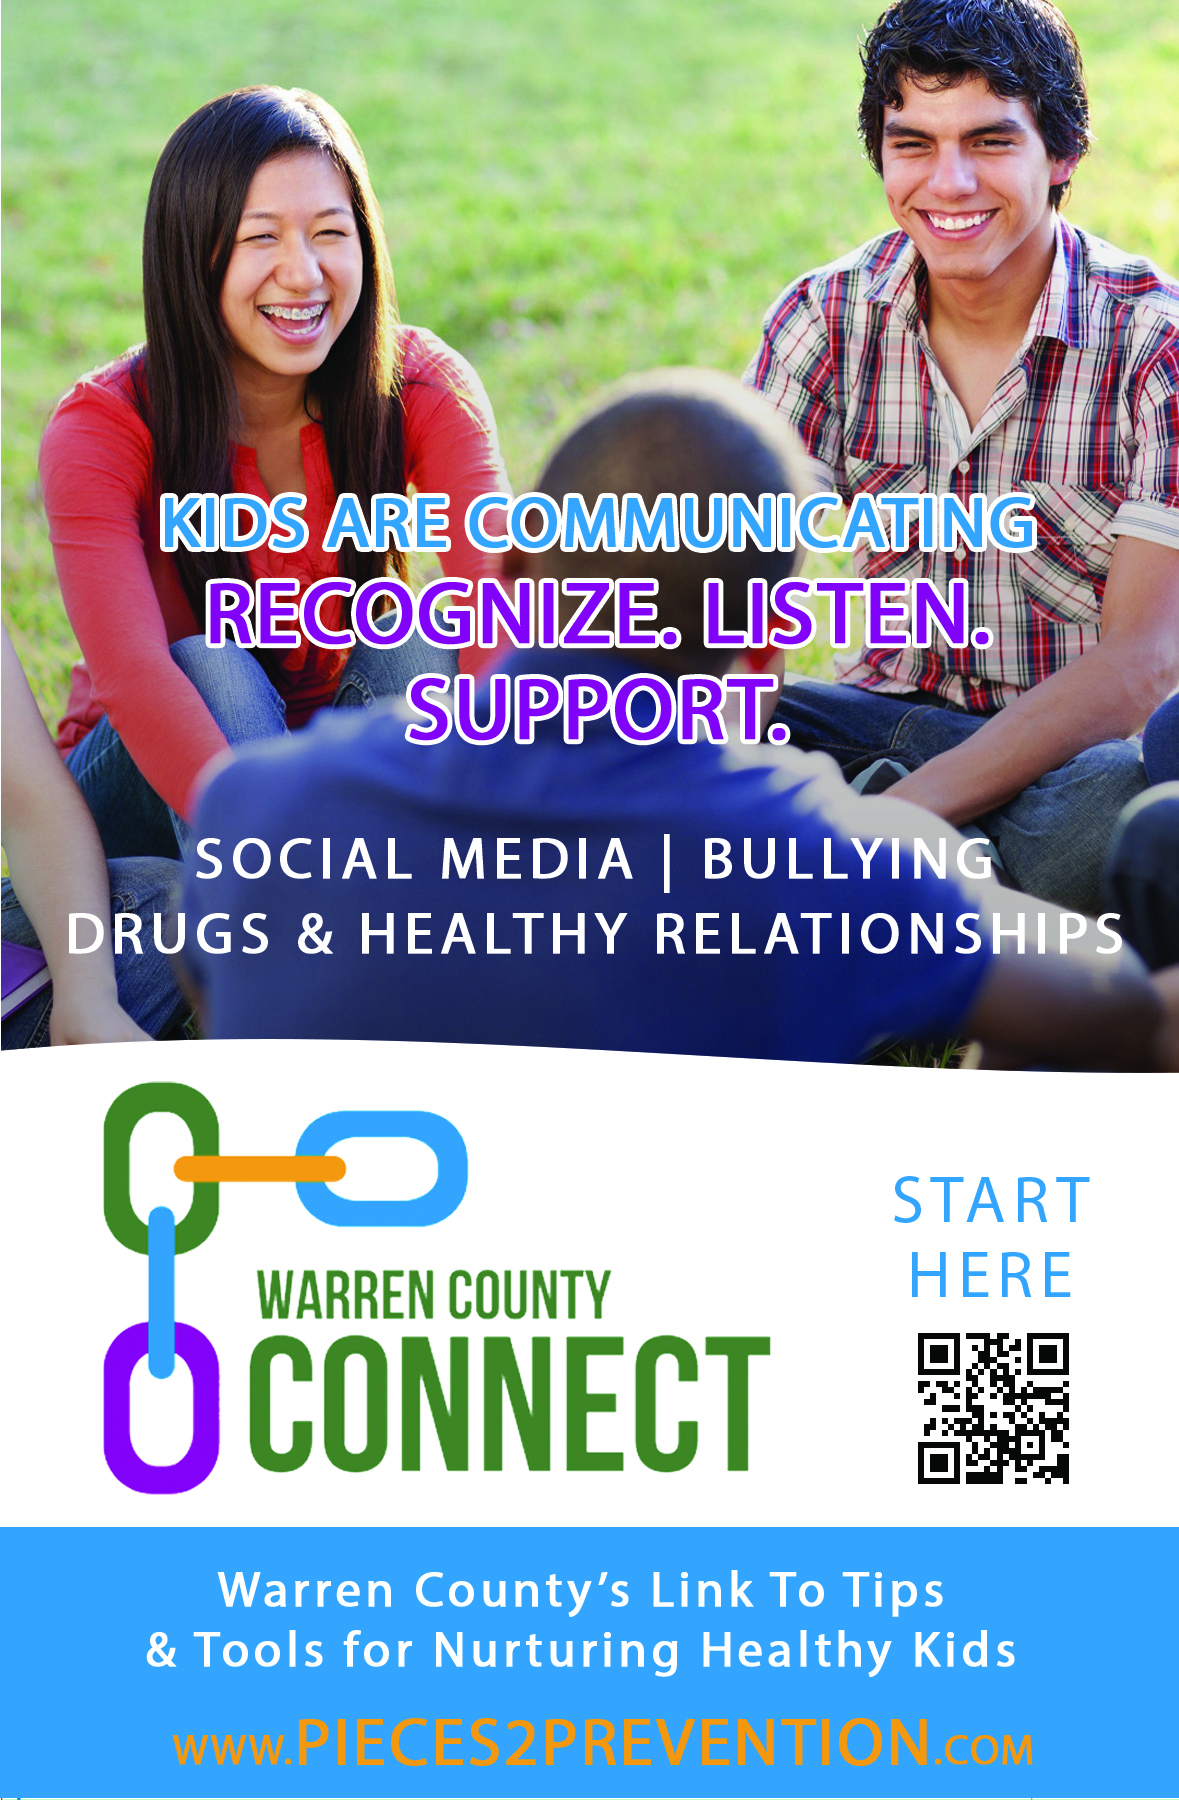 Warren County Connect